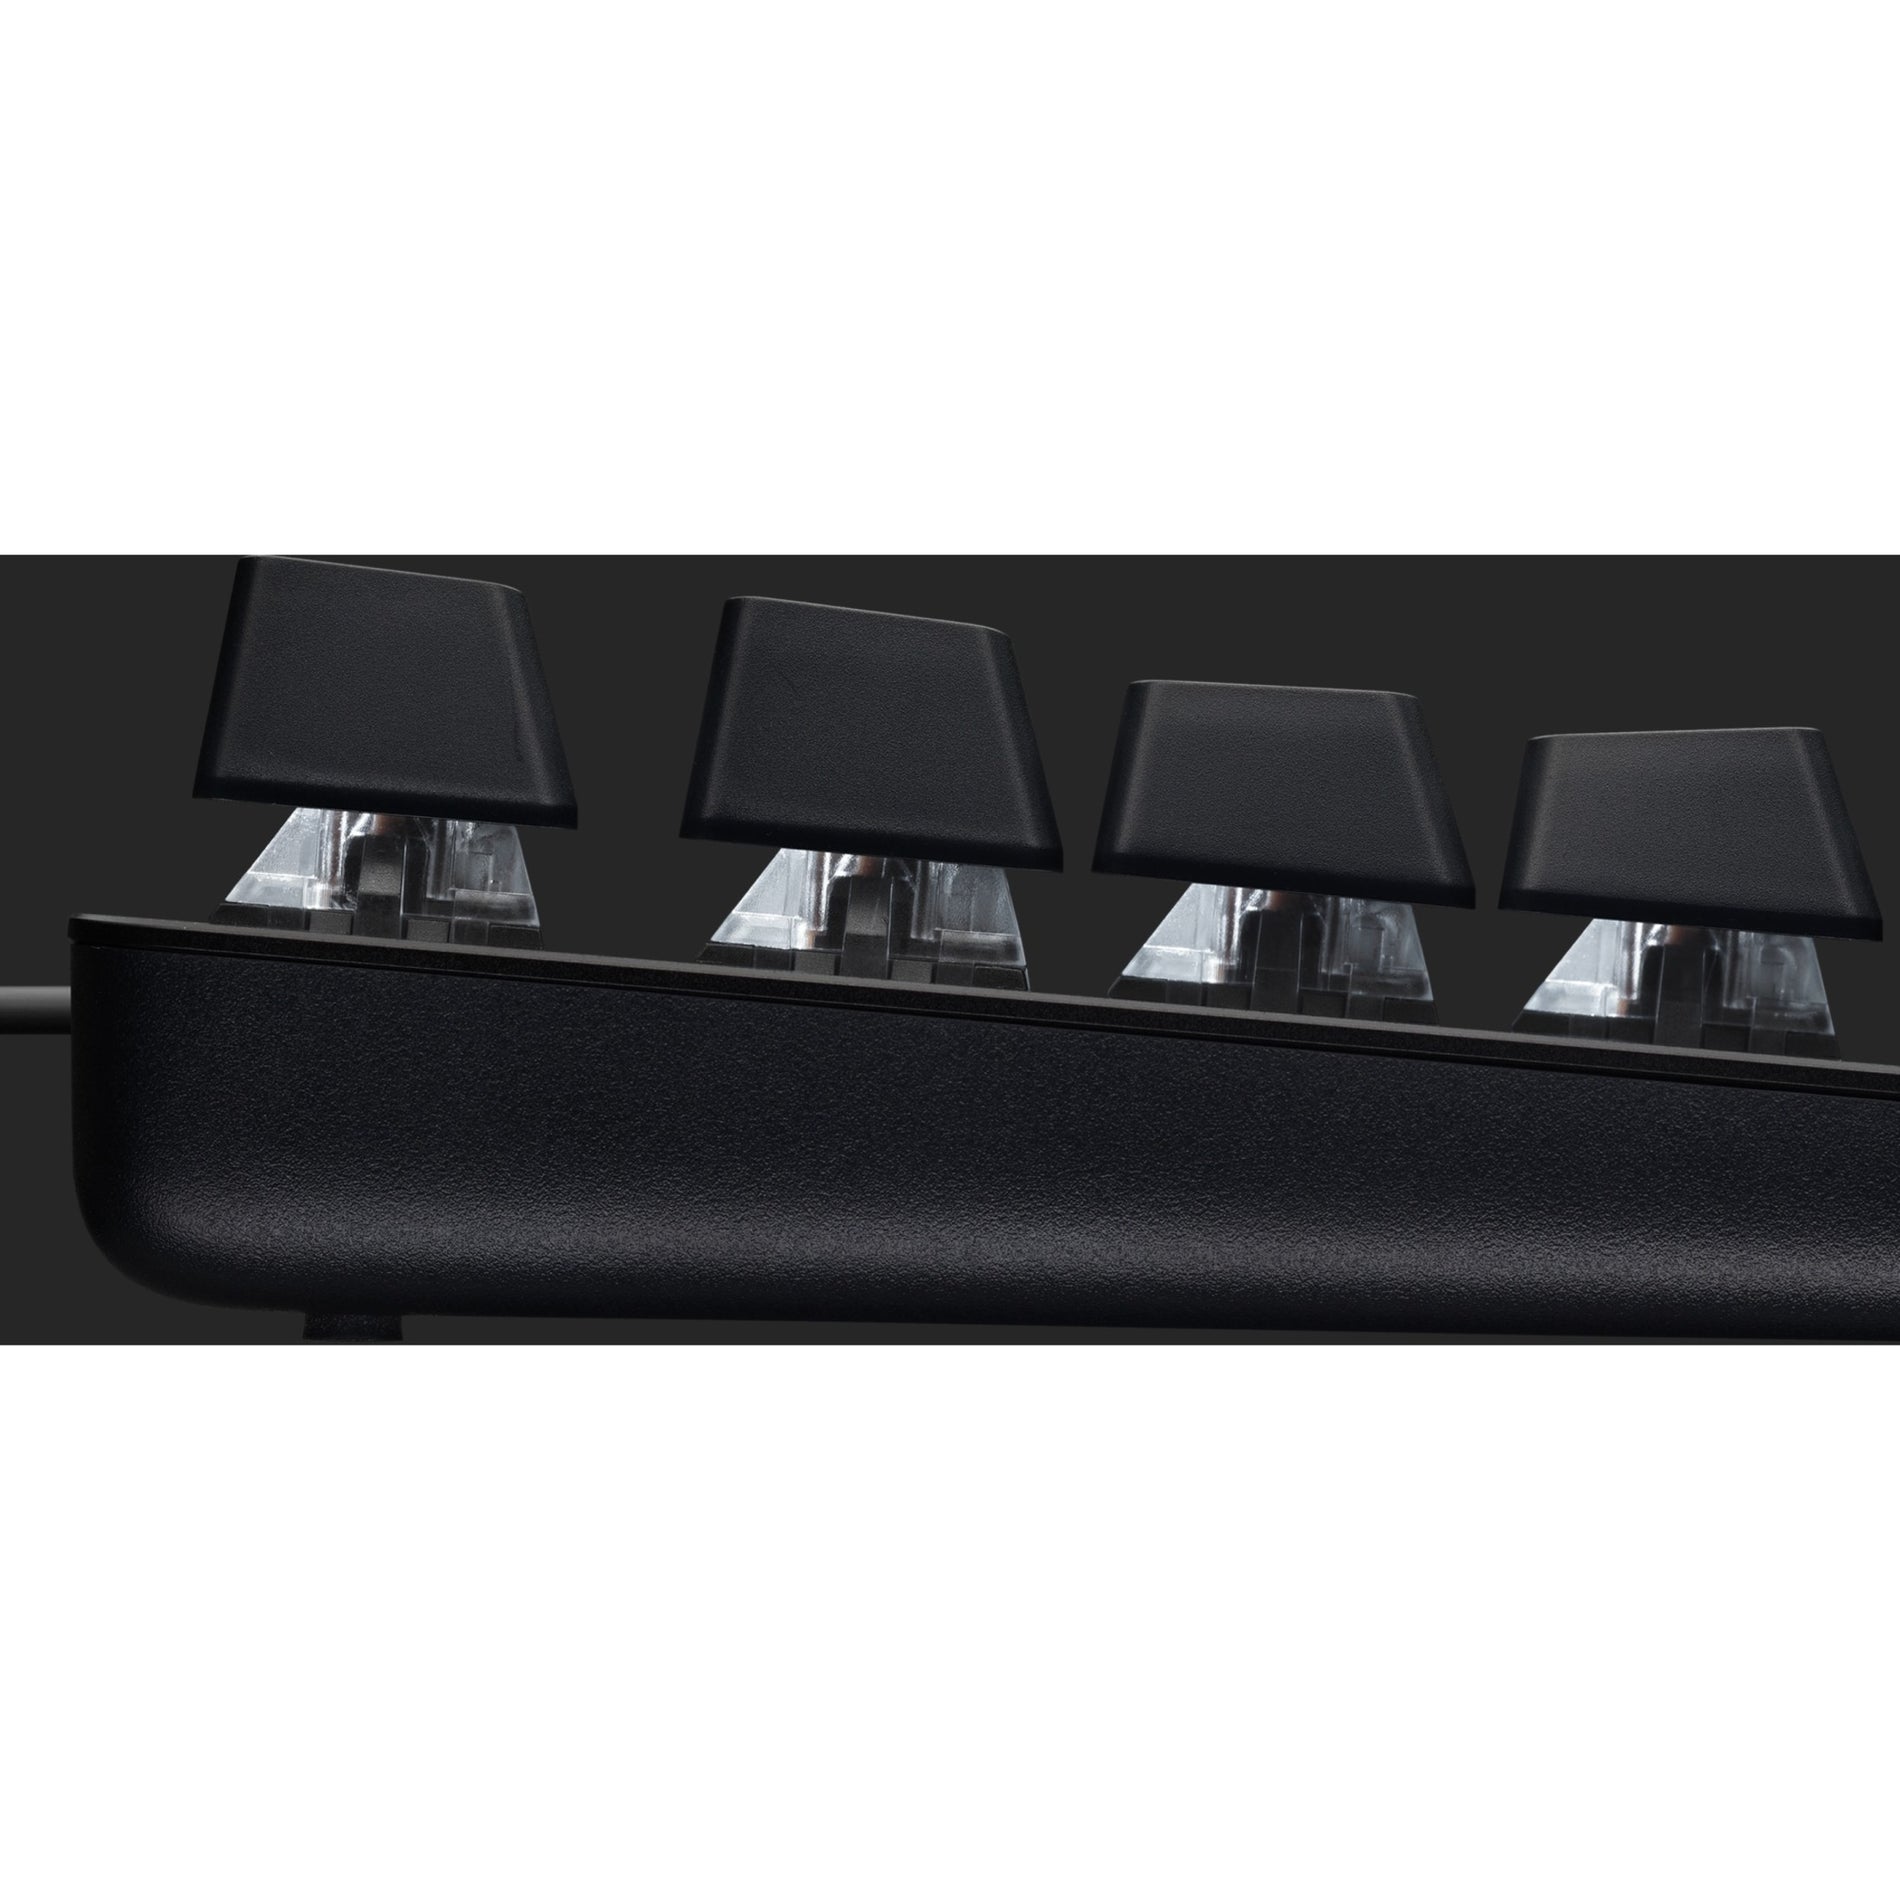 Logitech 920-010442 G413 TKL SE Mechanical Gaming Keyboard, Backlit LED, Compact, Anti-ghosting